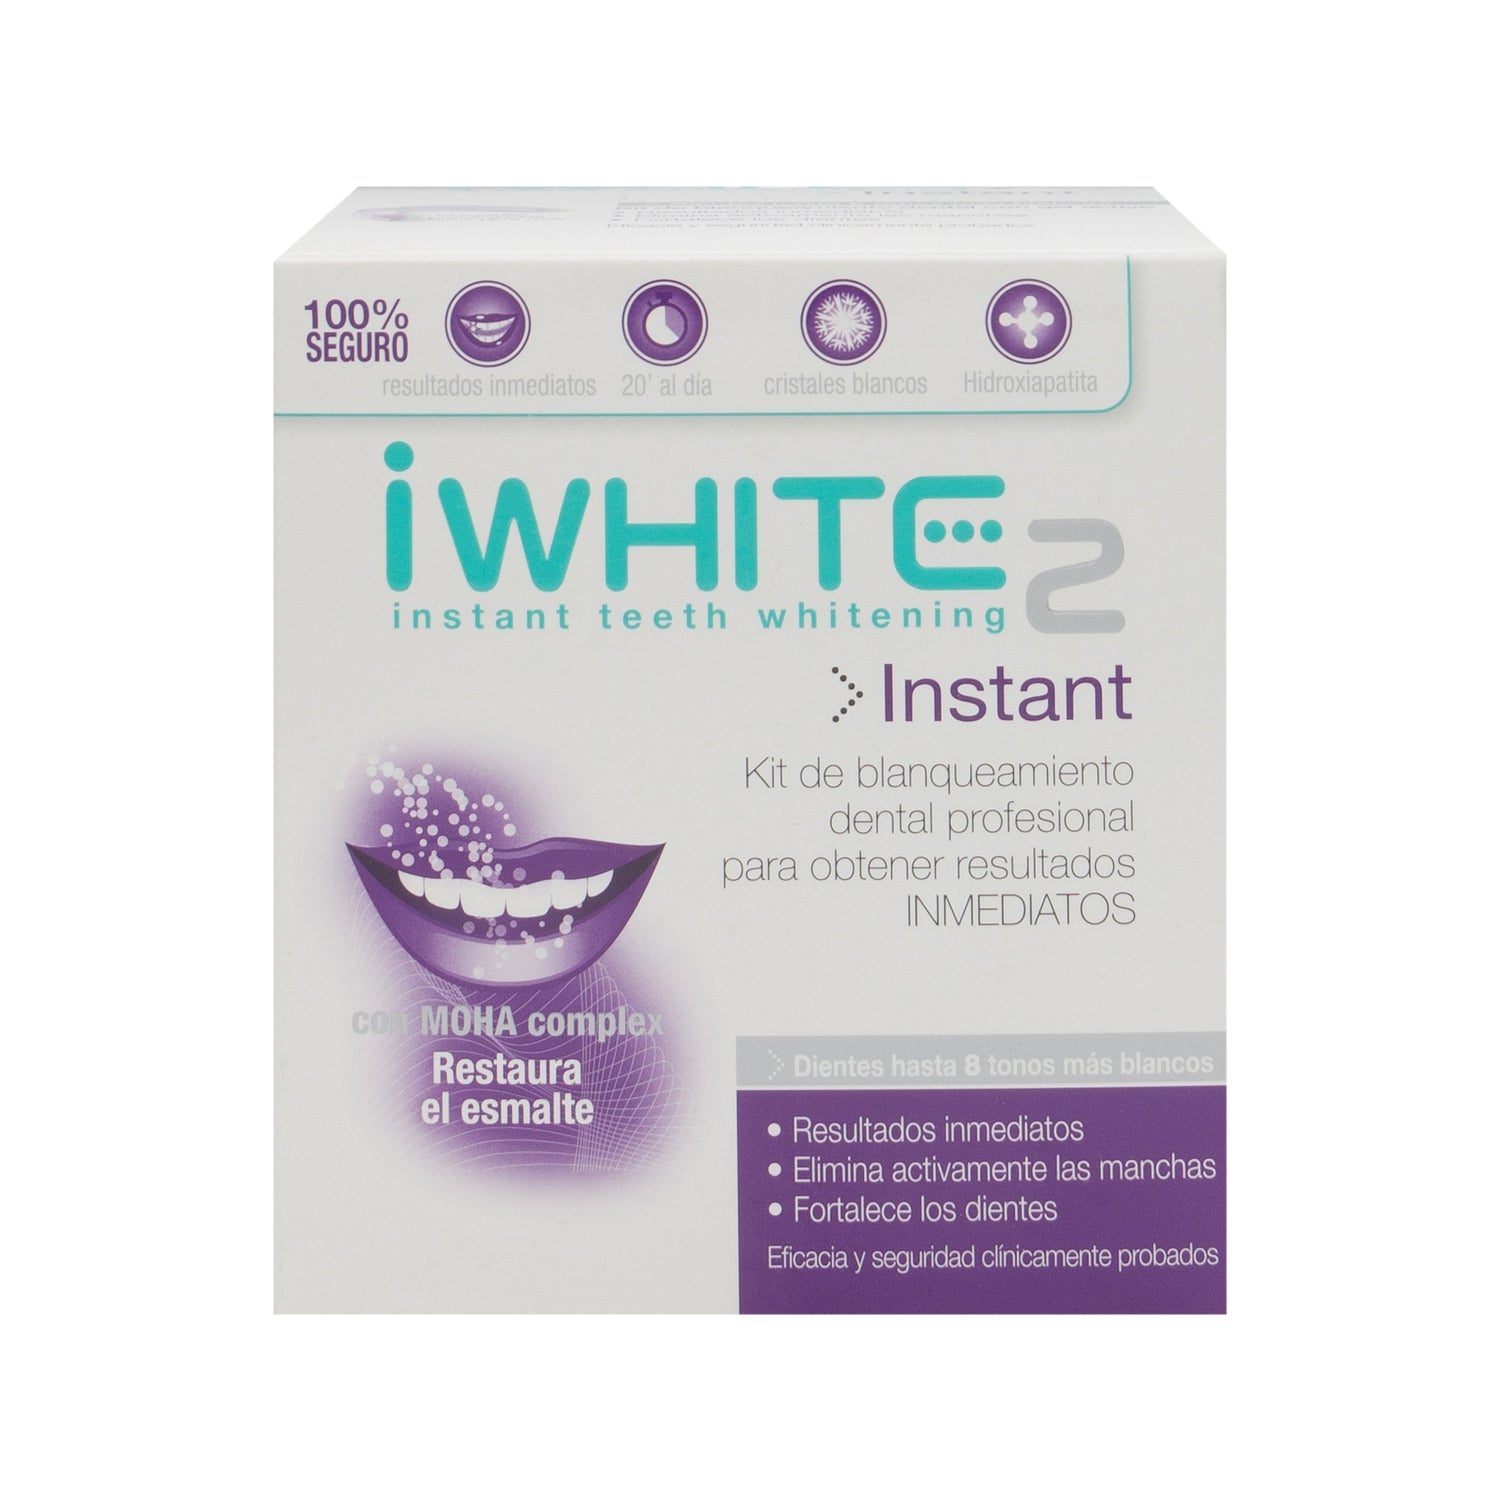 2 Instant teeth whitening kit 10 | PromoFarma